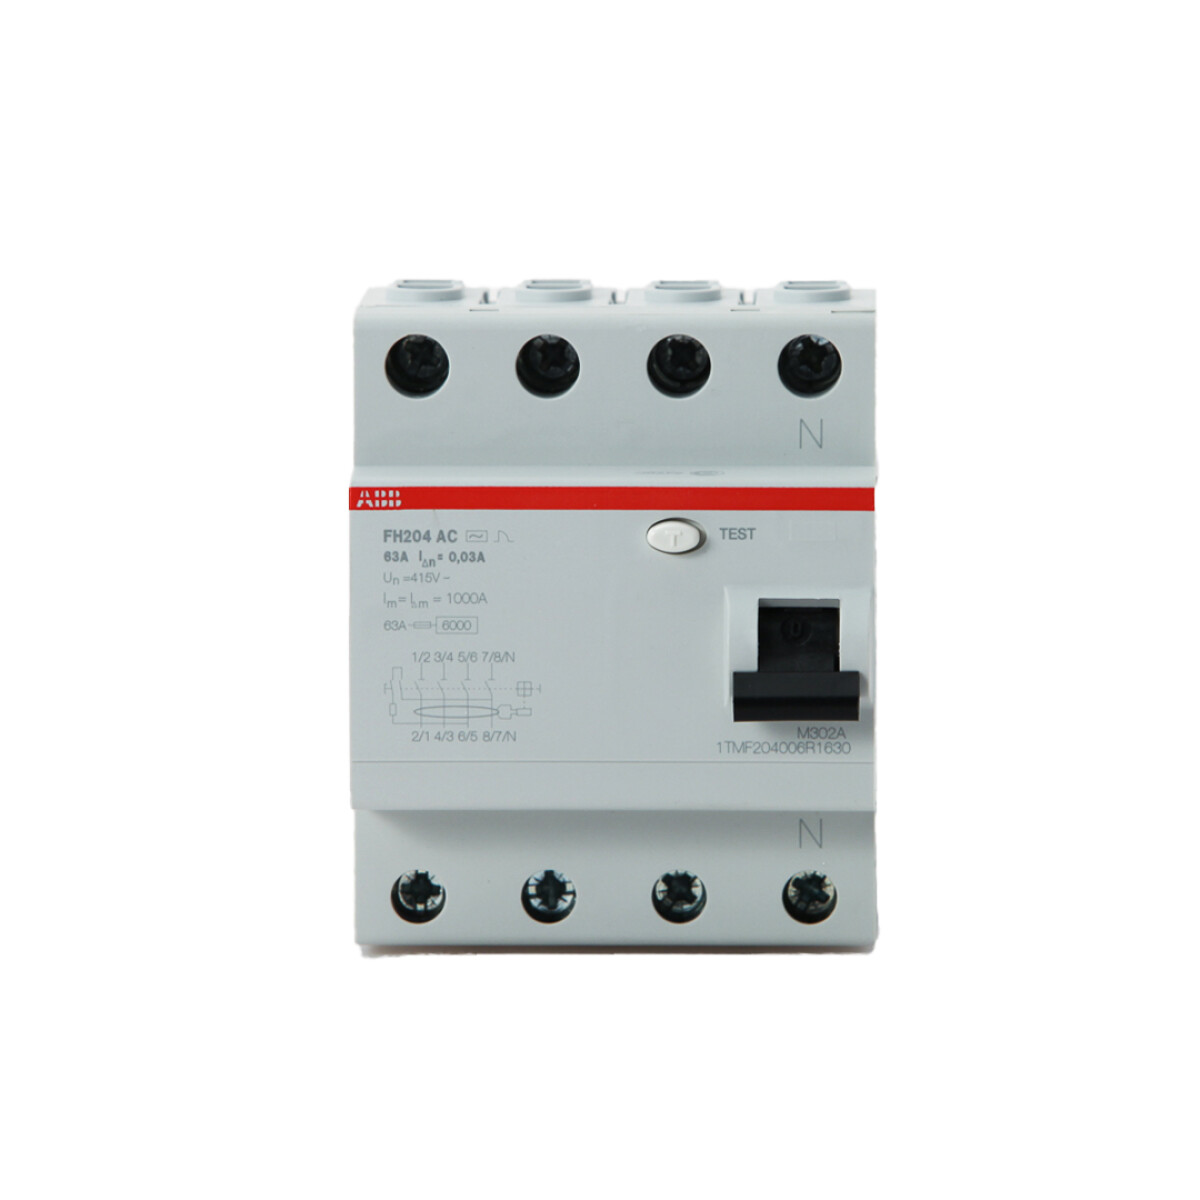 Interruptor diferencial 4P - 6kA - Linea FH200 - ABB - 40A 300mA 